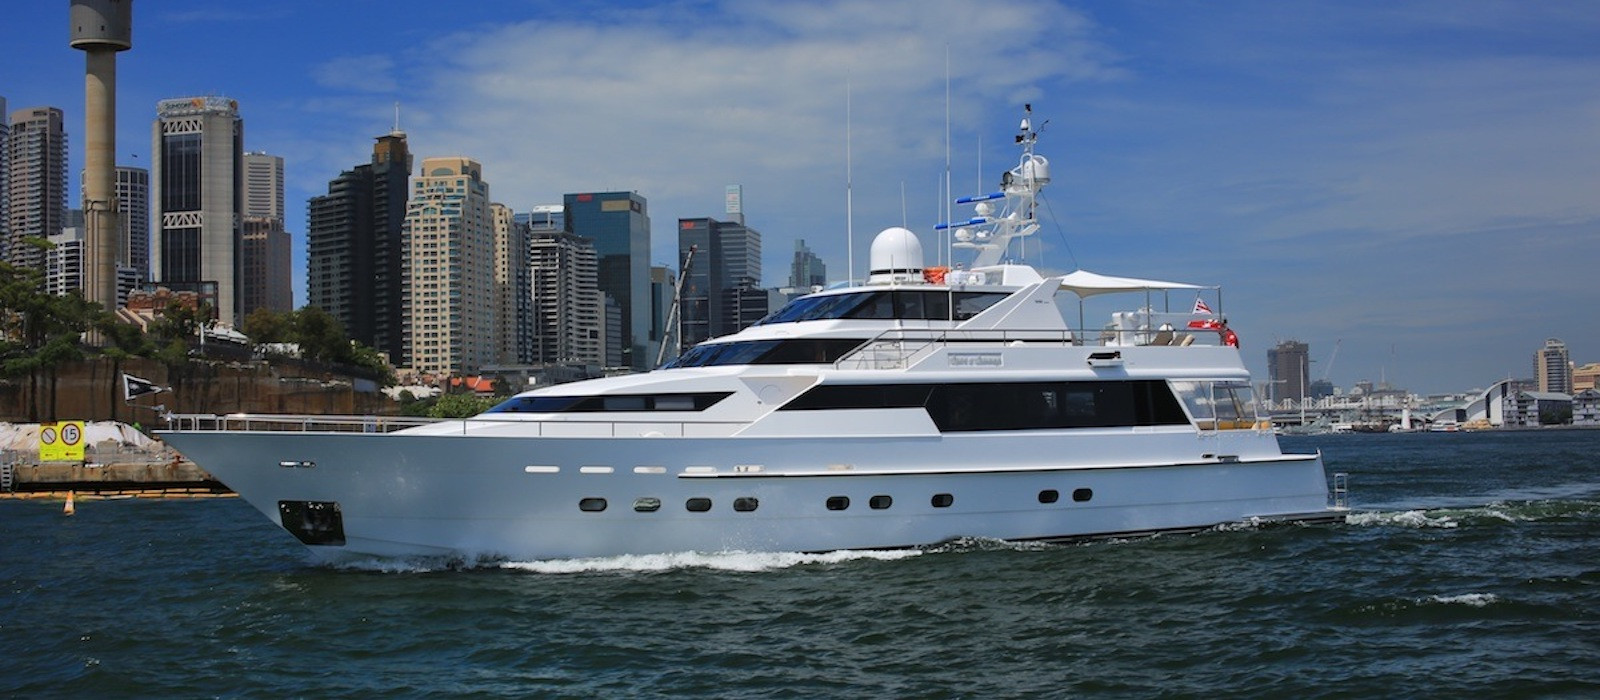 Cityscape background on Oscar II superyacht hire